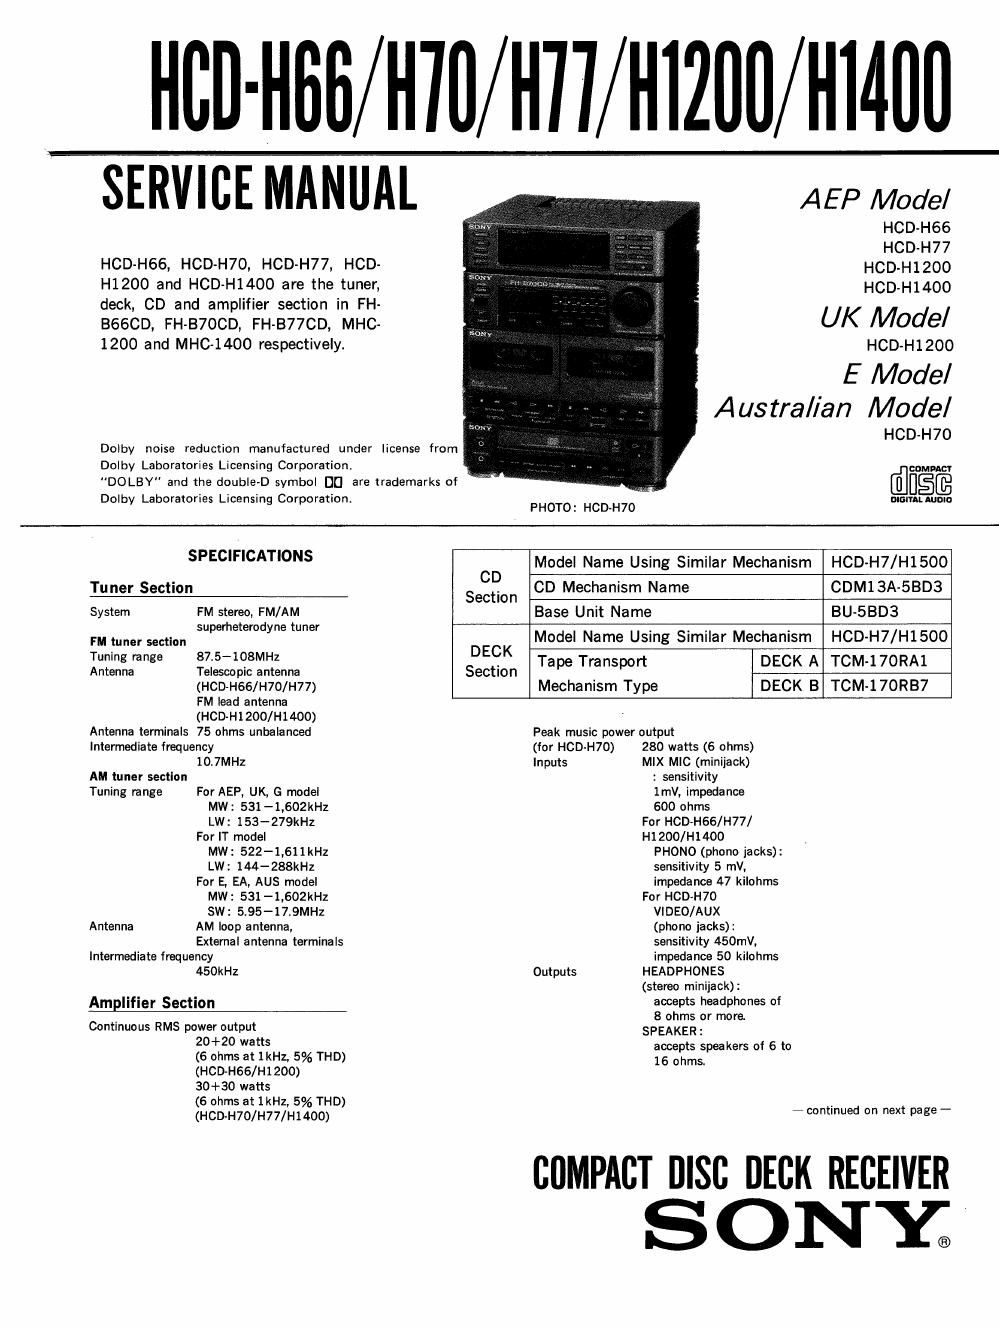 sony hcd h 70 service manual